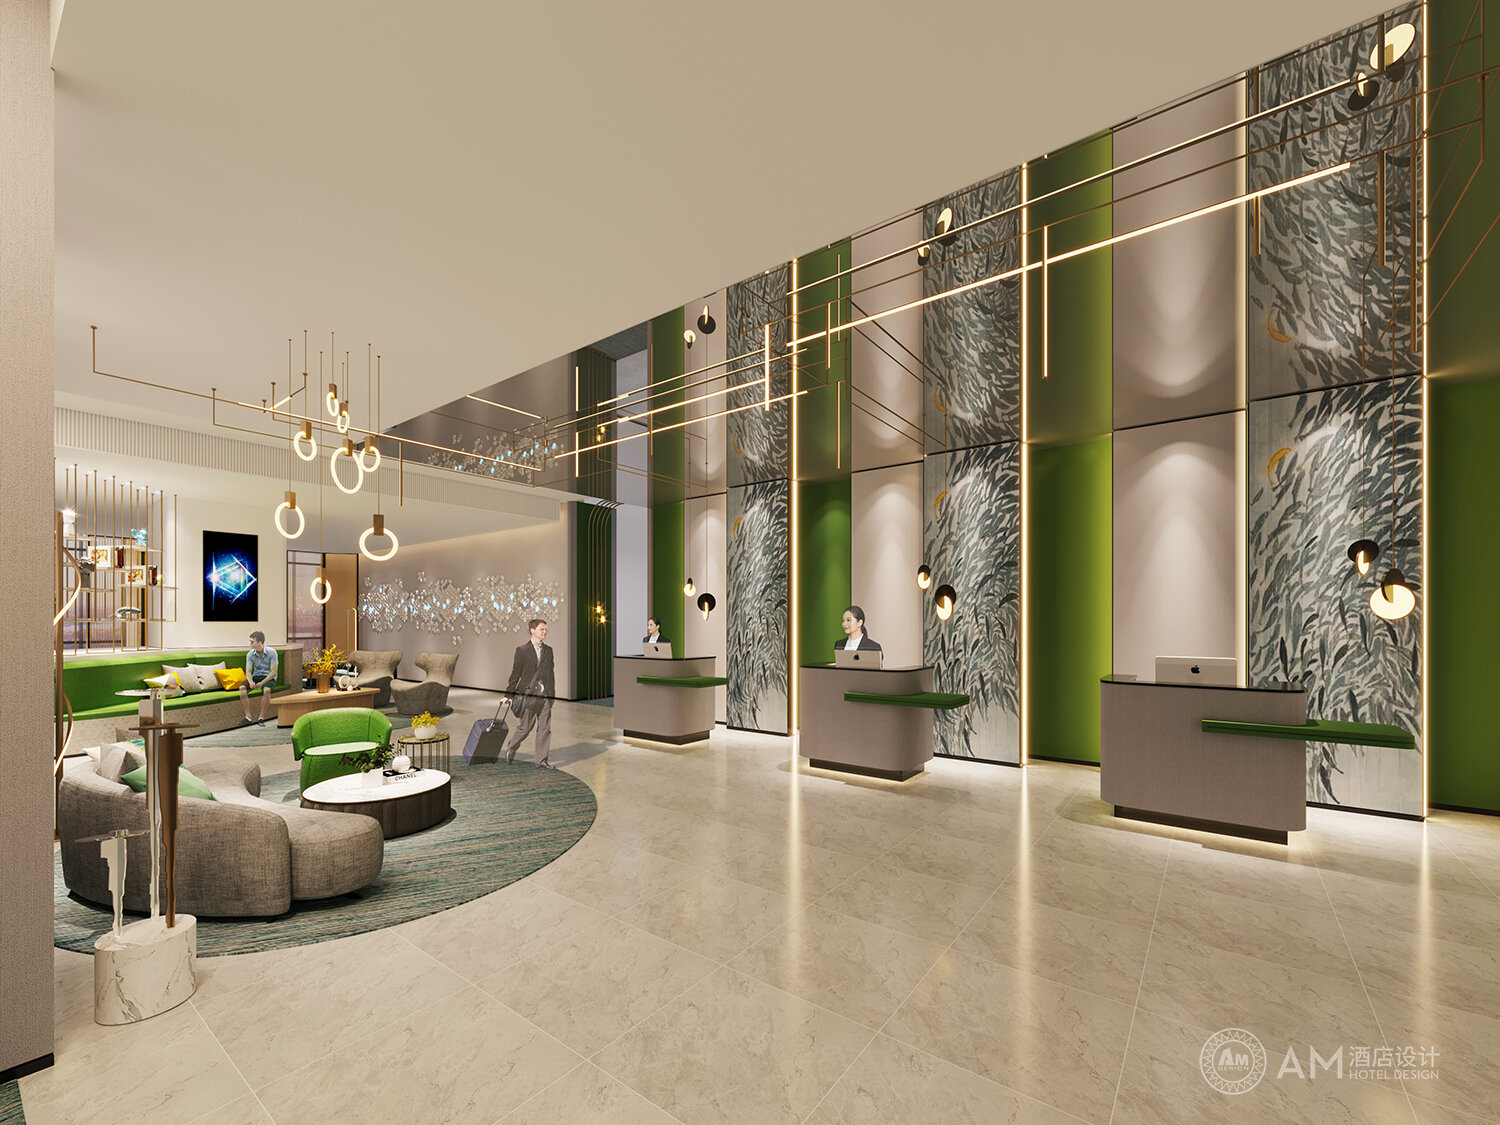 Am | lobby design of Weinan Jianguo Hotel